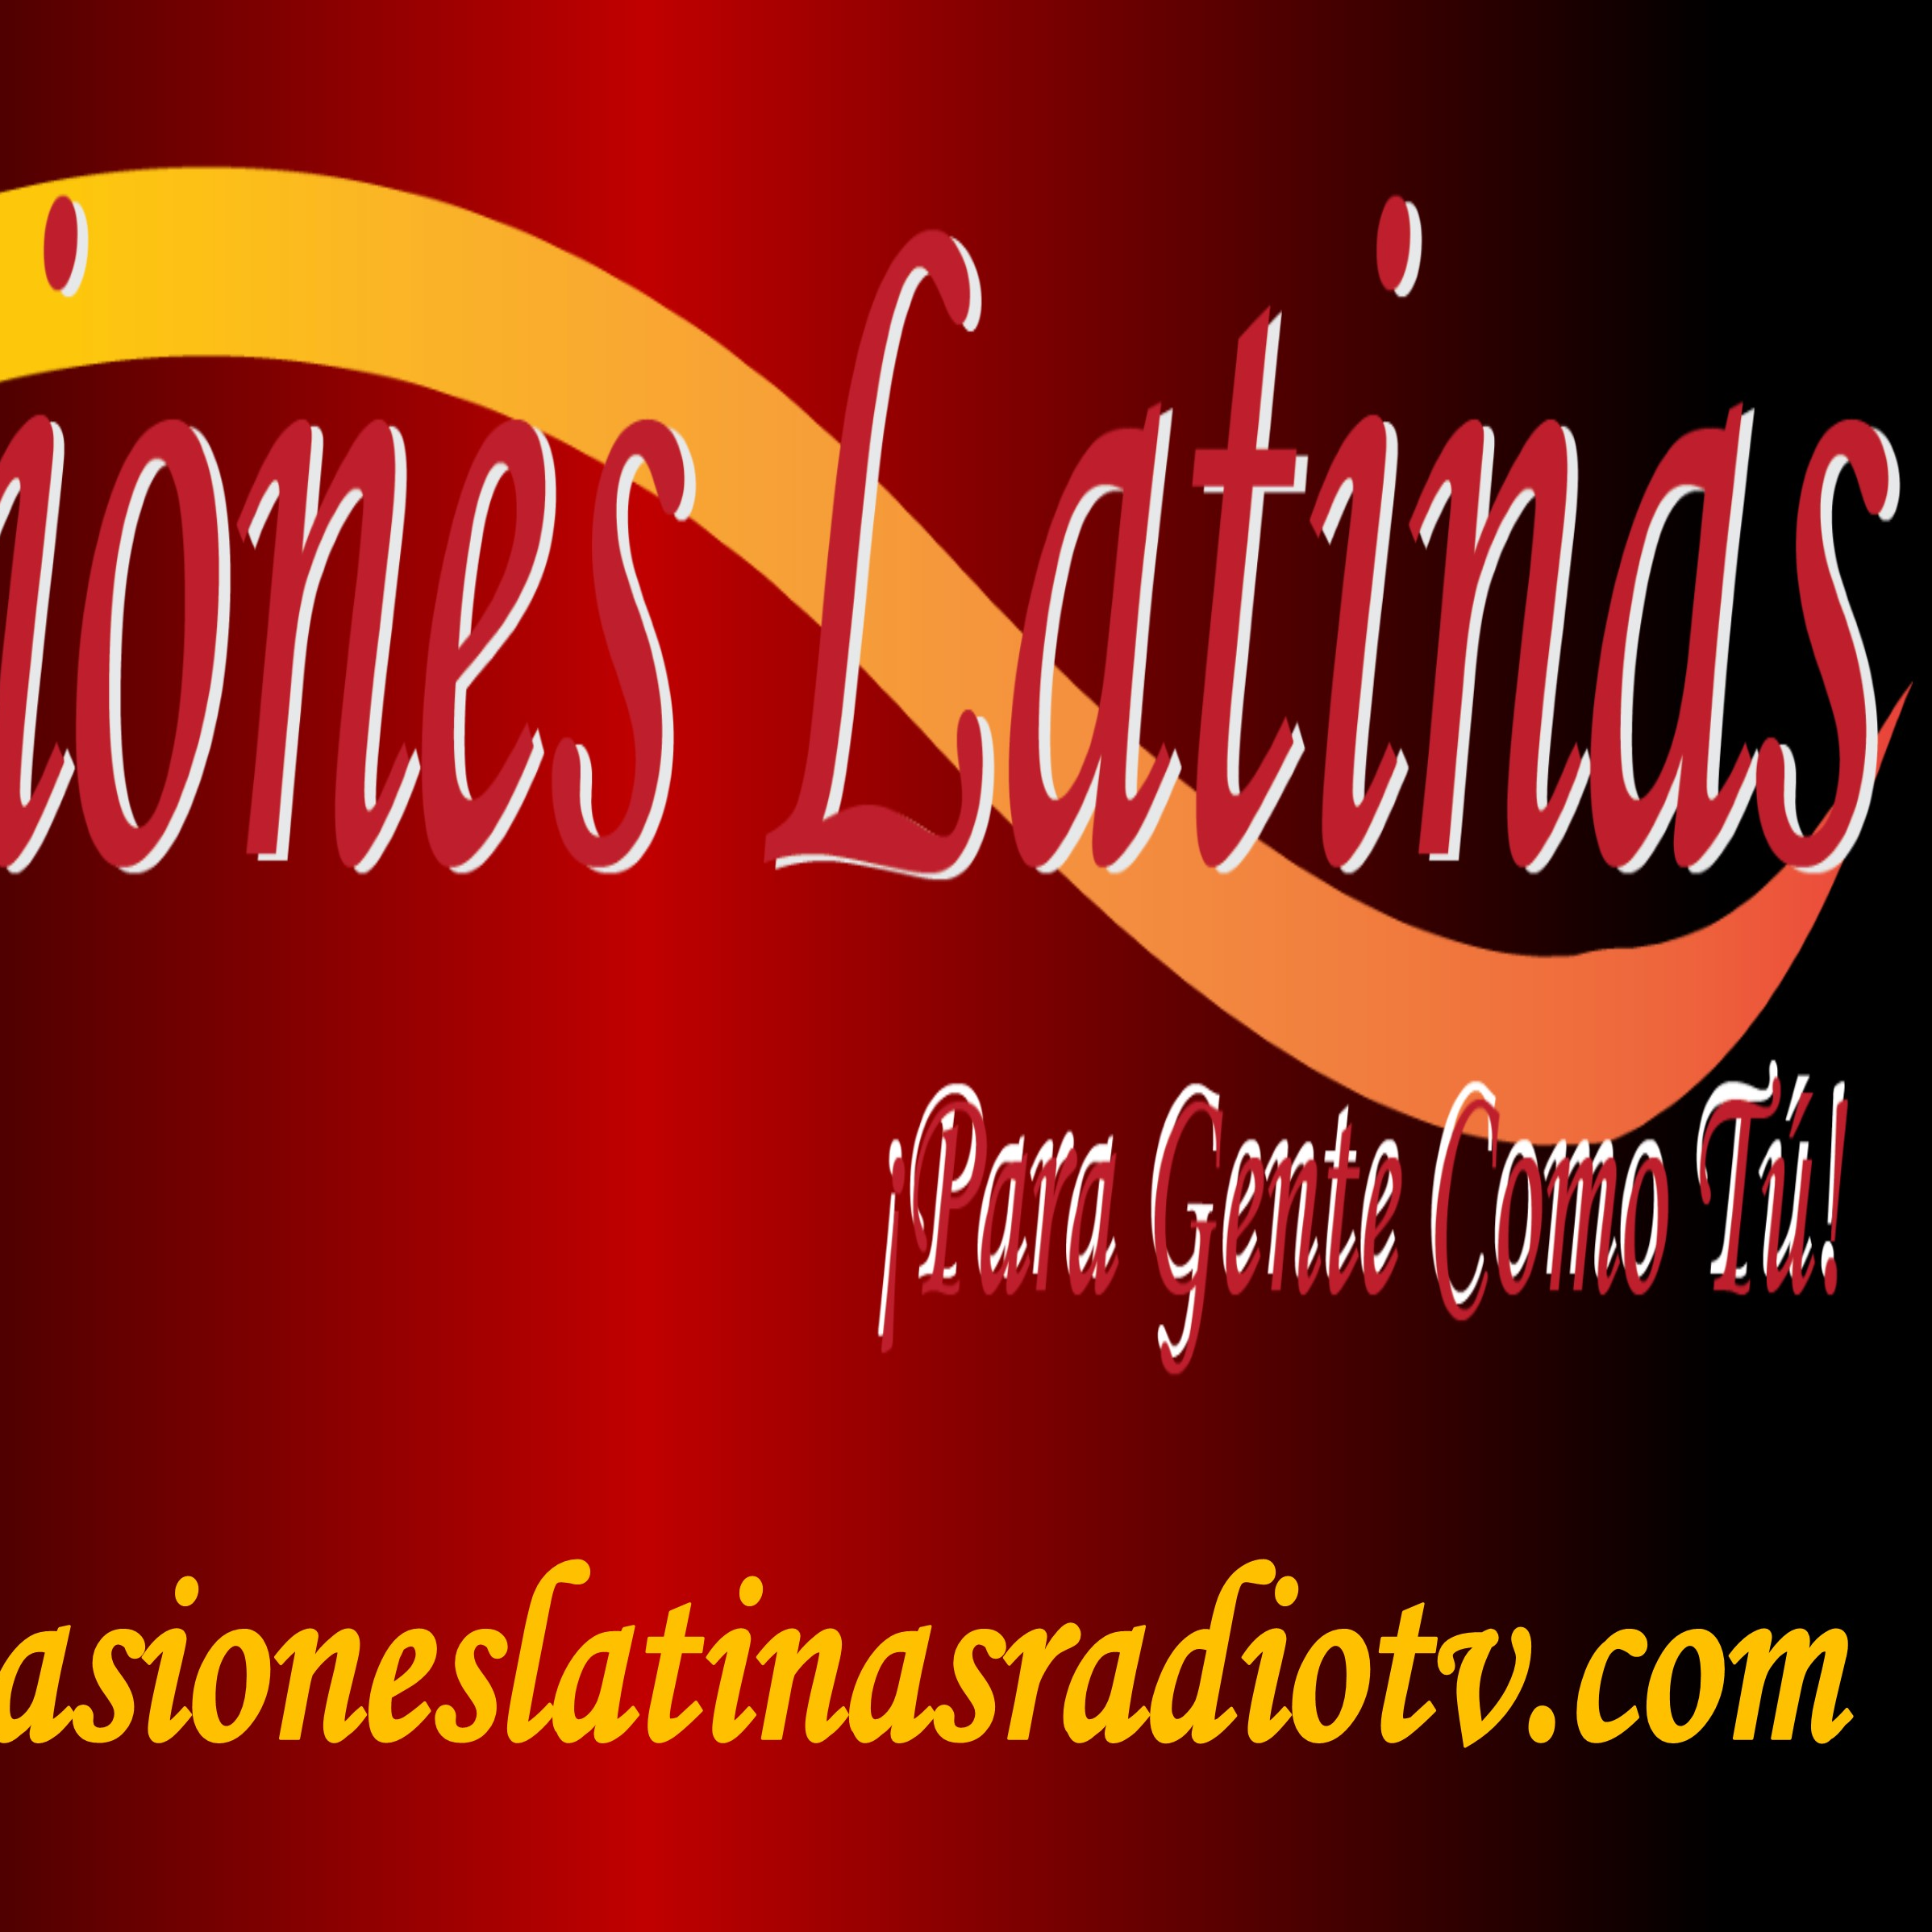 Pasiones Latinas Radio TV